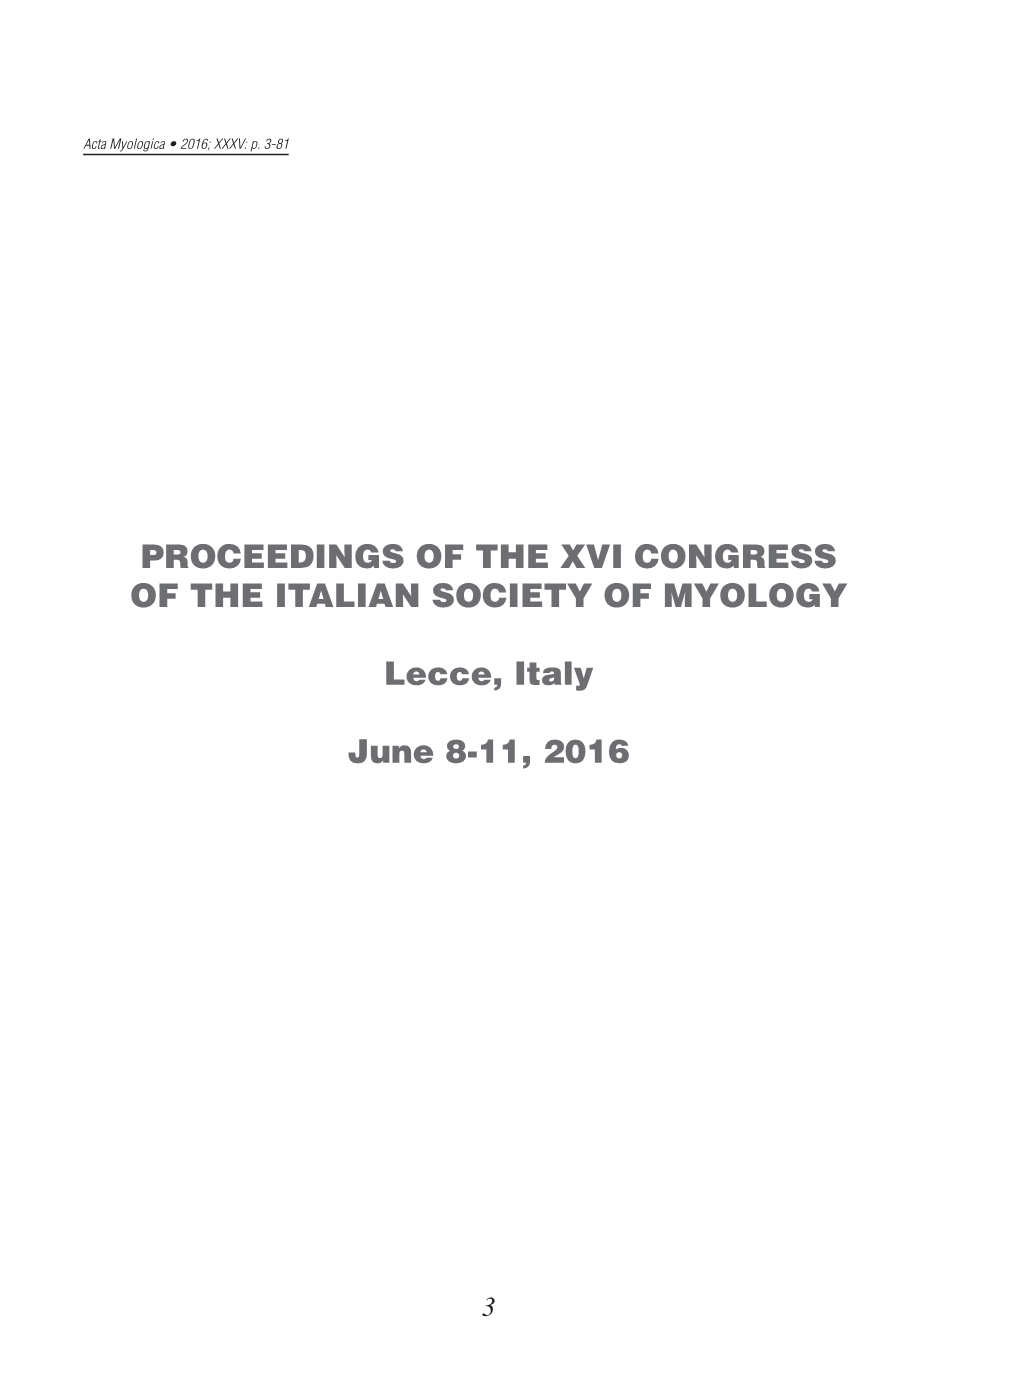 PROCEEDINGS of the XVI CONGRESS of the ITALIAN SOCIETY of MYOLOGY